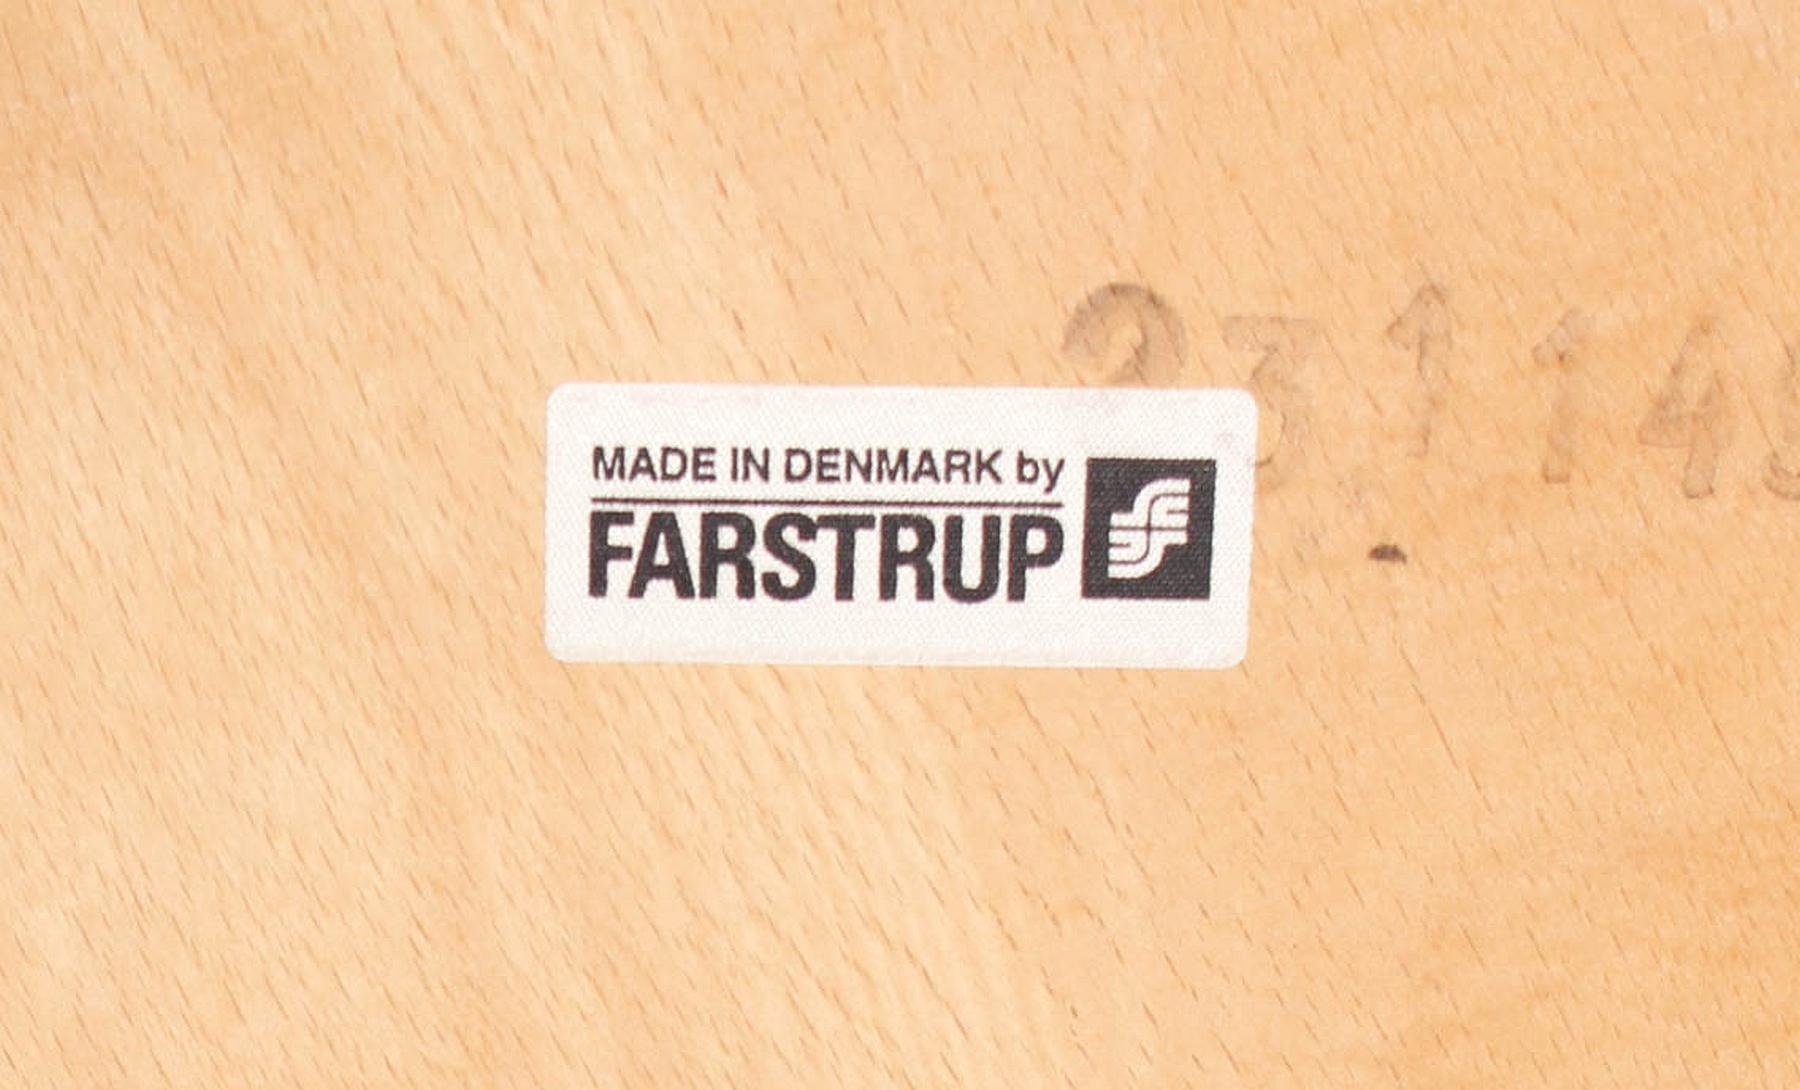 farstrup furniture history